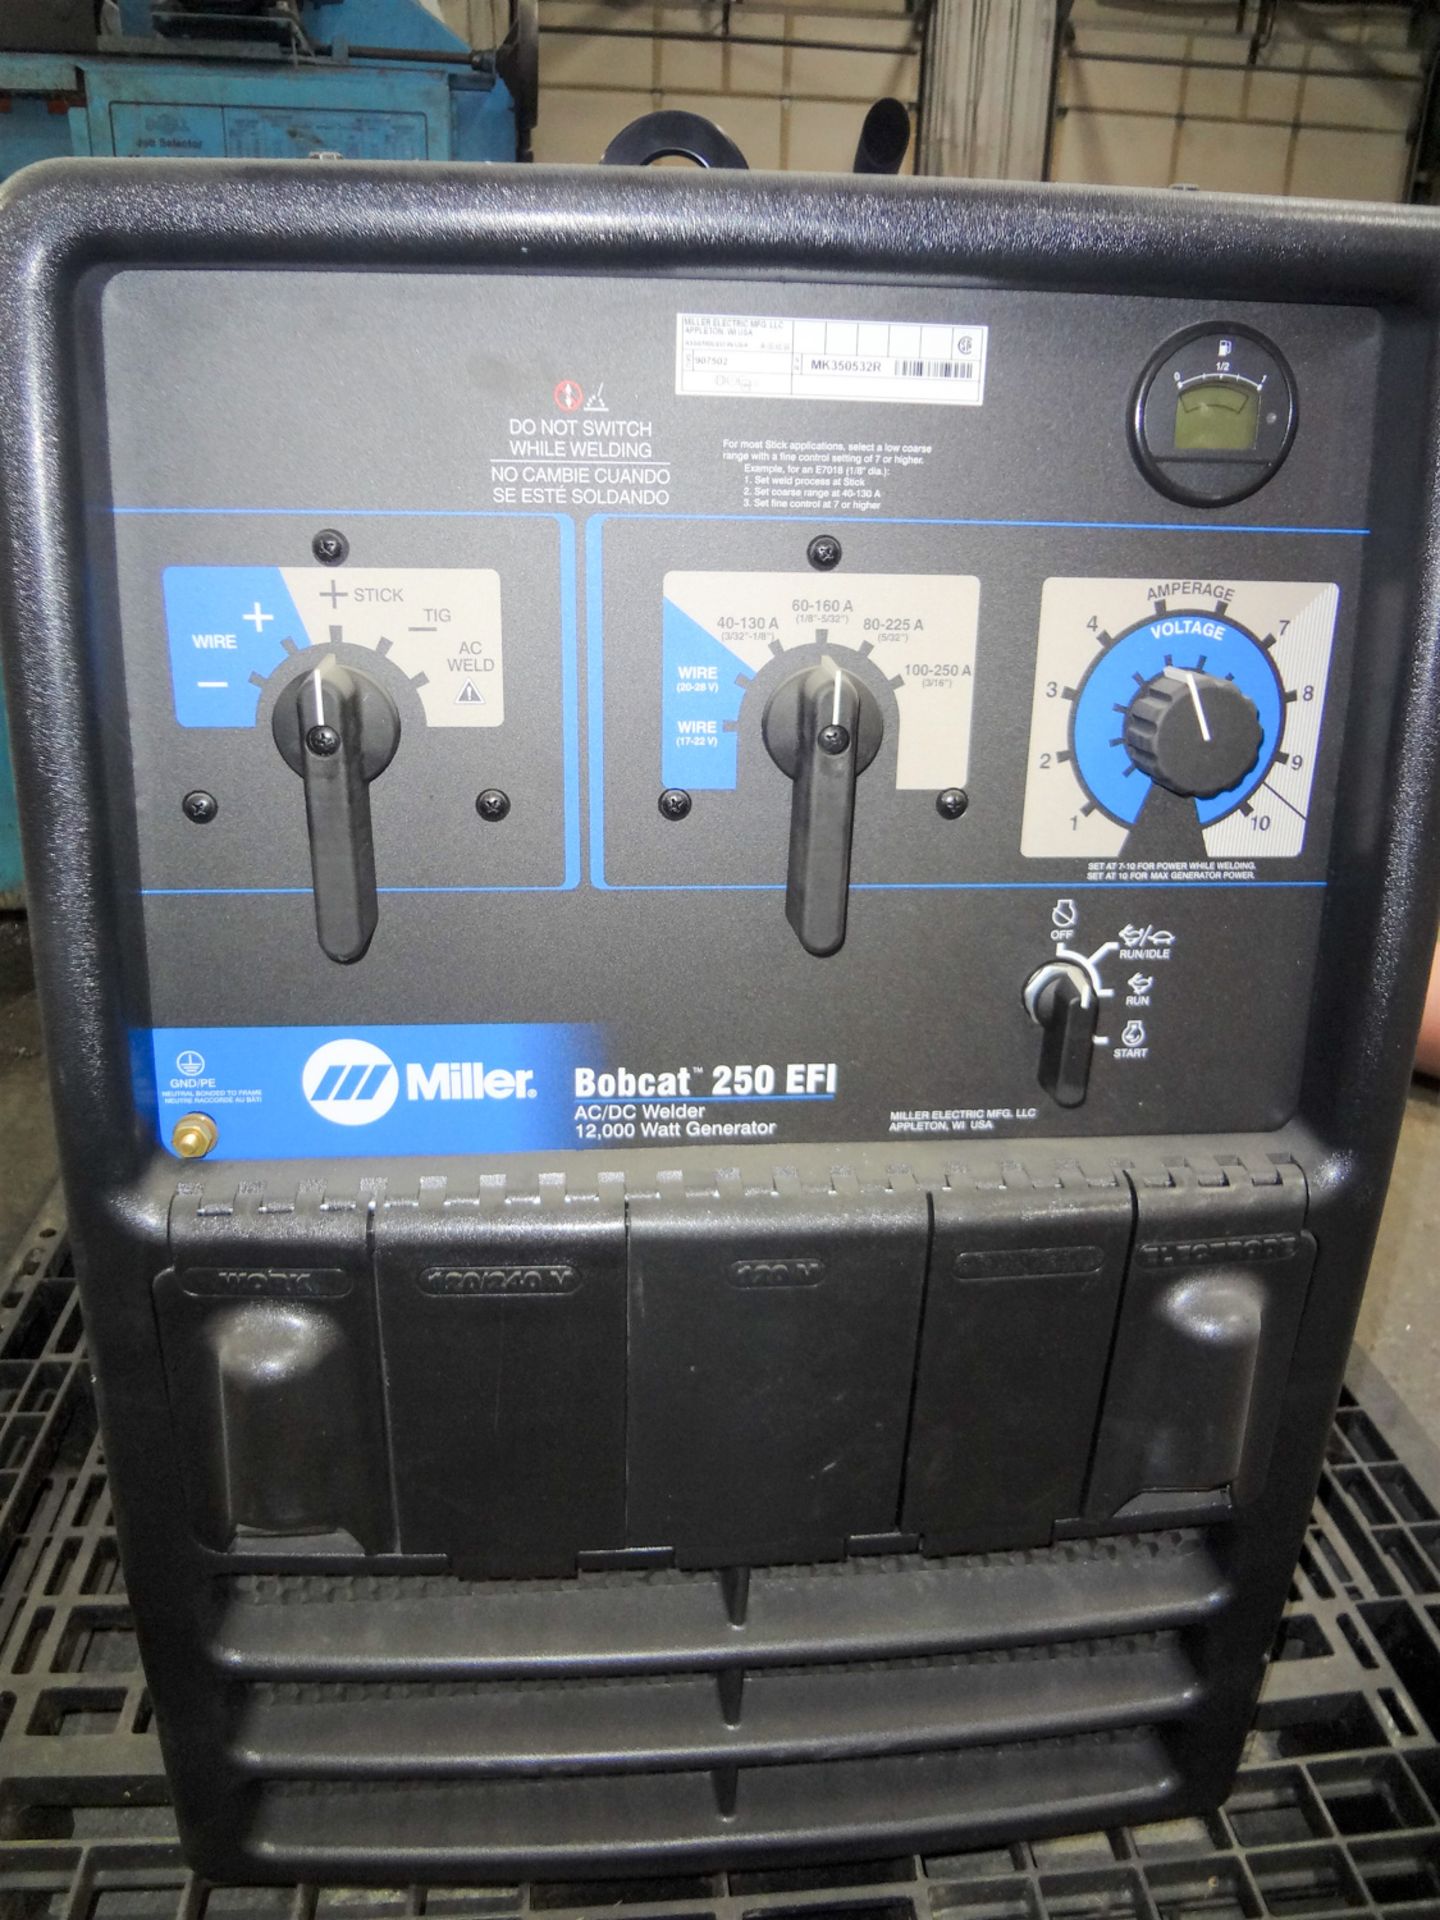 Miller Bobcat 250 EFI 200-AMP Generator Welder, 12,000 Watt Generator - Image 2 of 7